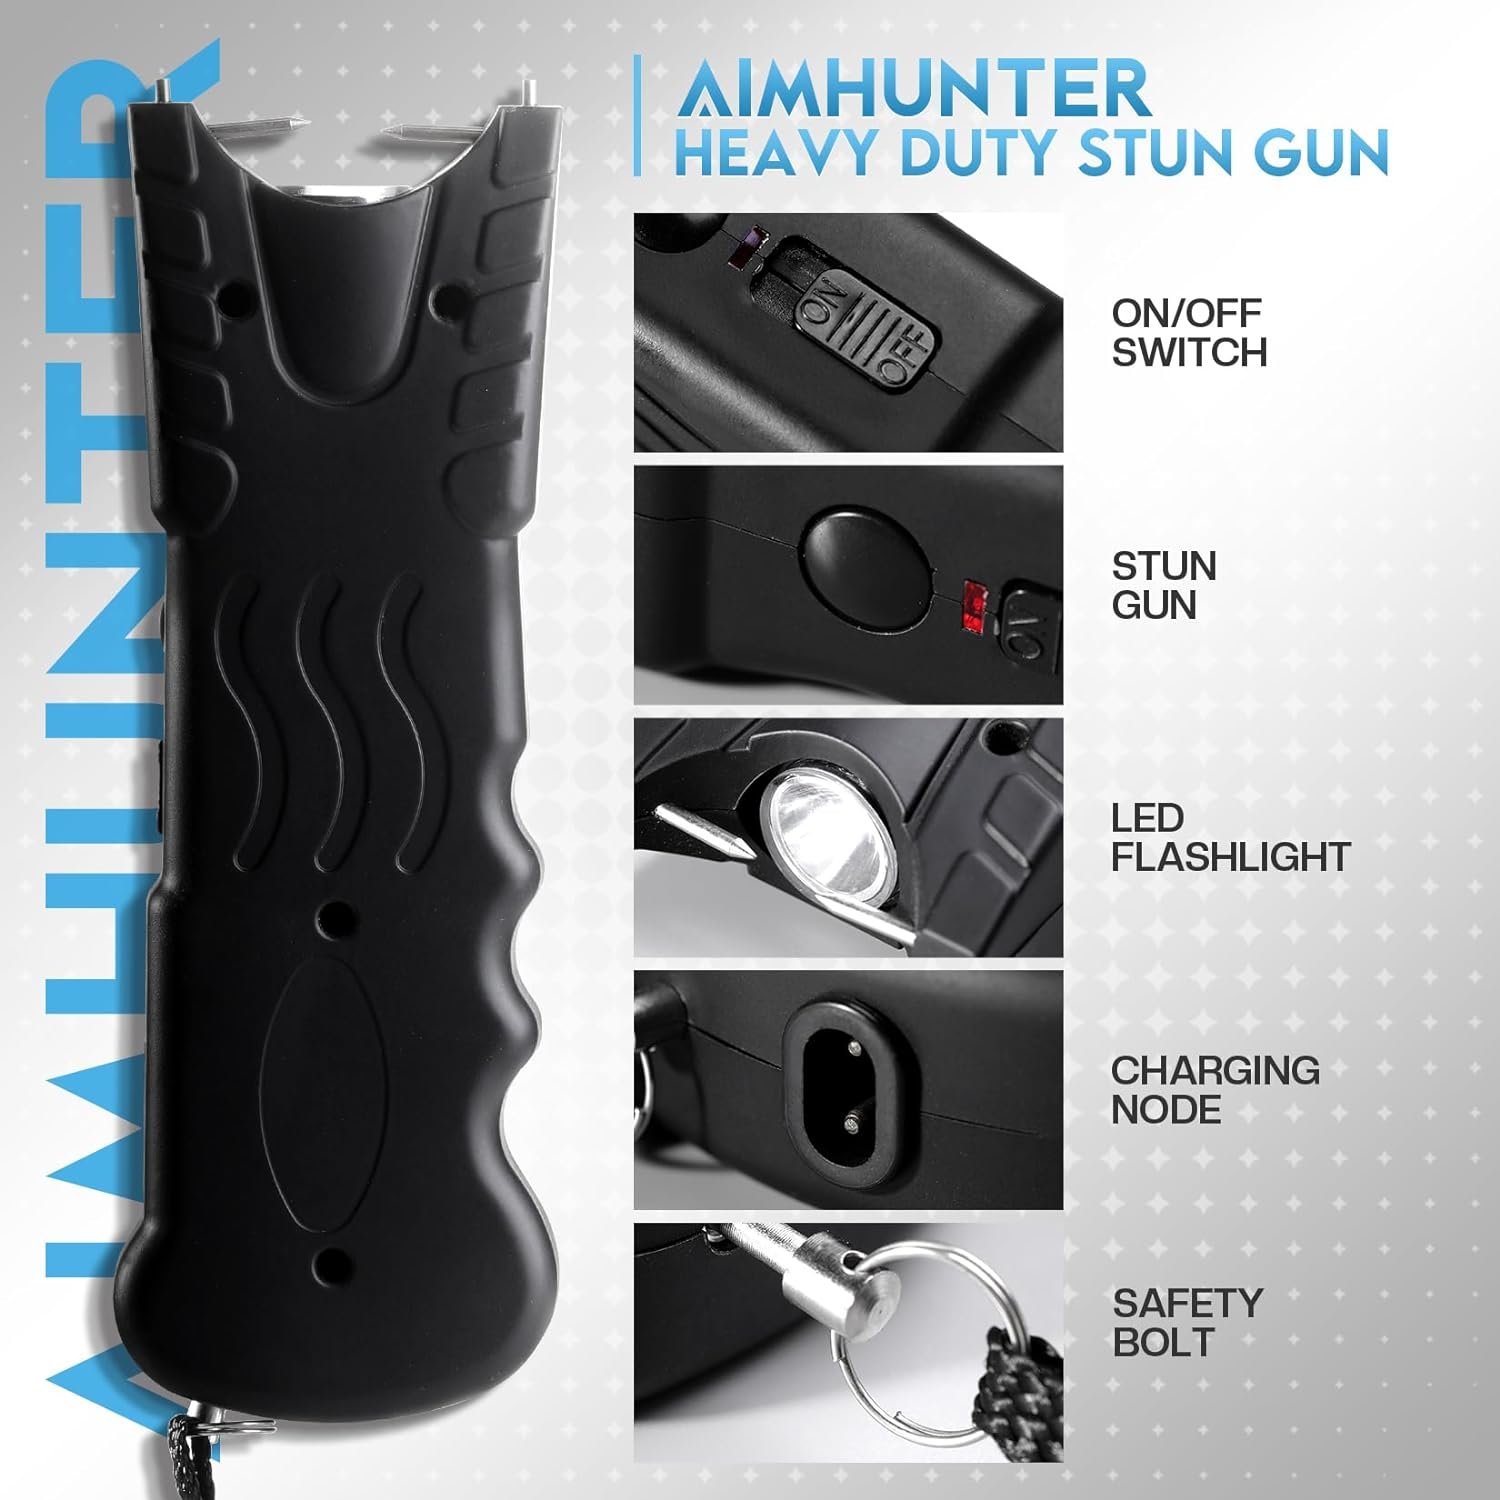 AIMHUNTER Stun Gun for Self Defense Protection-Stun Gun Protection for Women-Rechargeable Stun Gun with LED Flashlight, Black (Black)